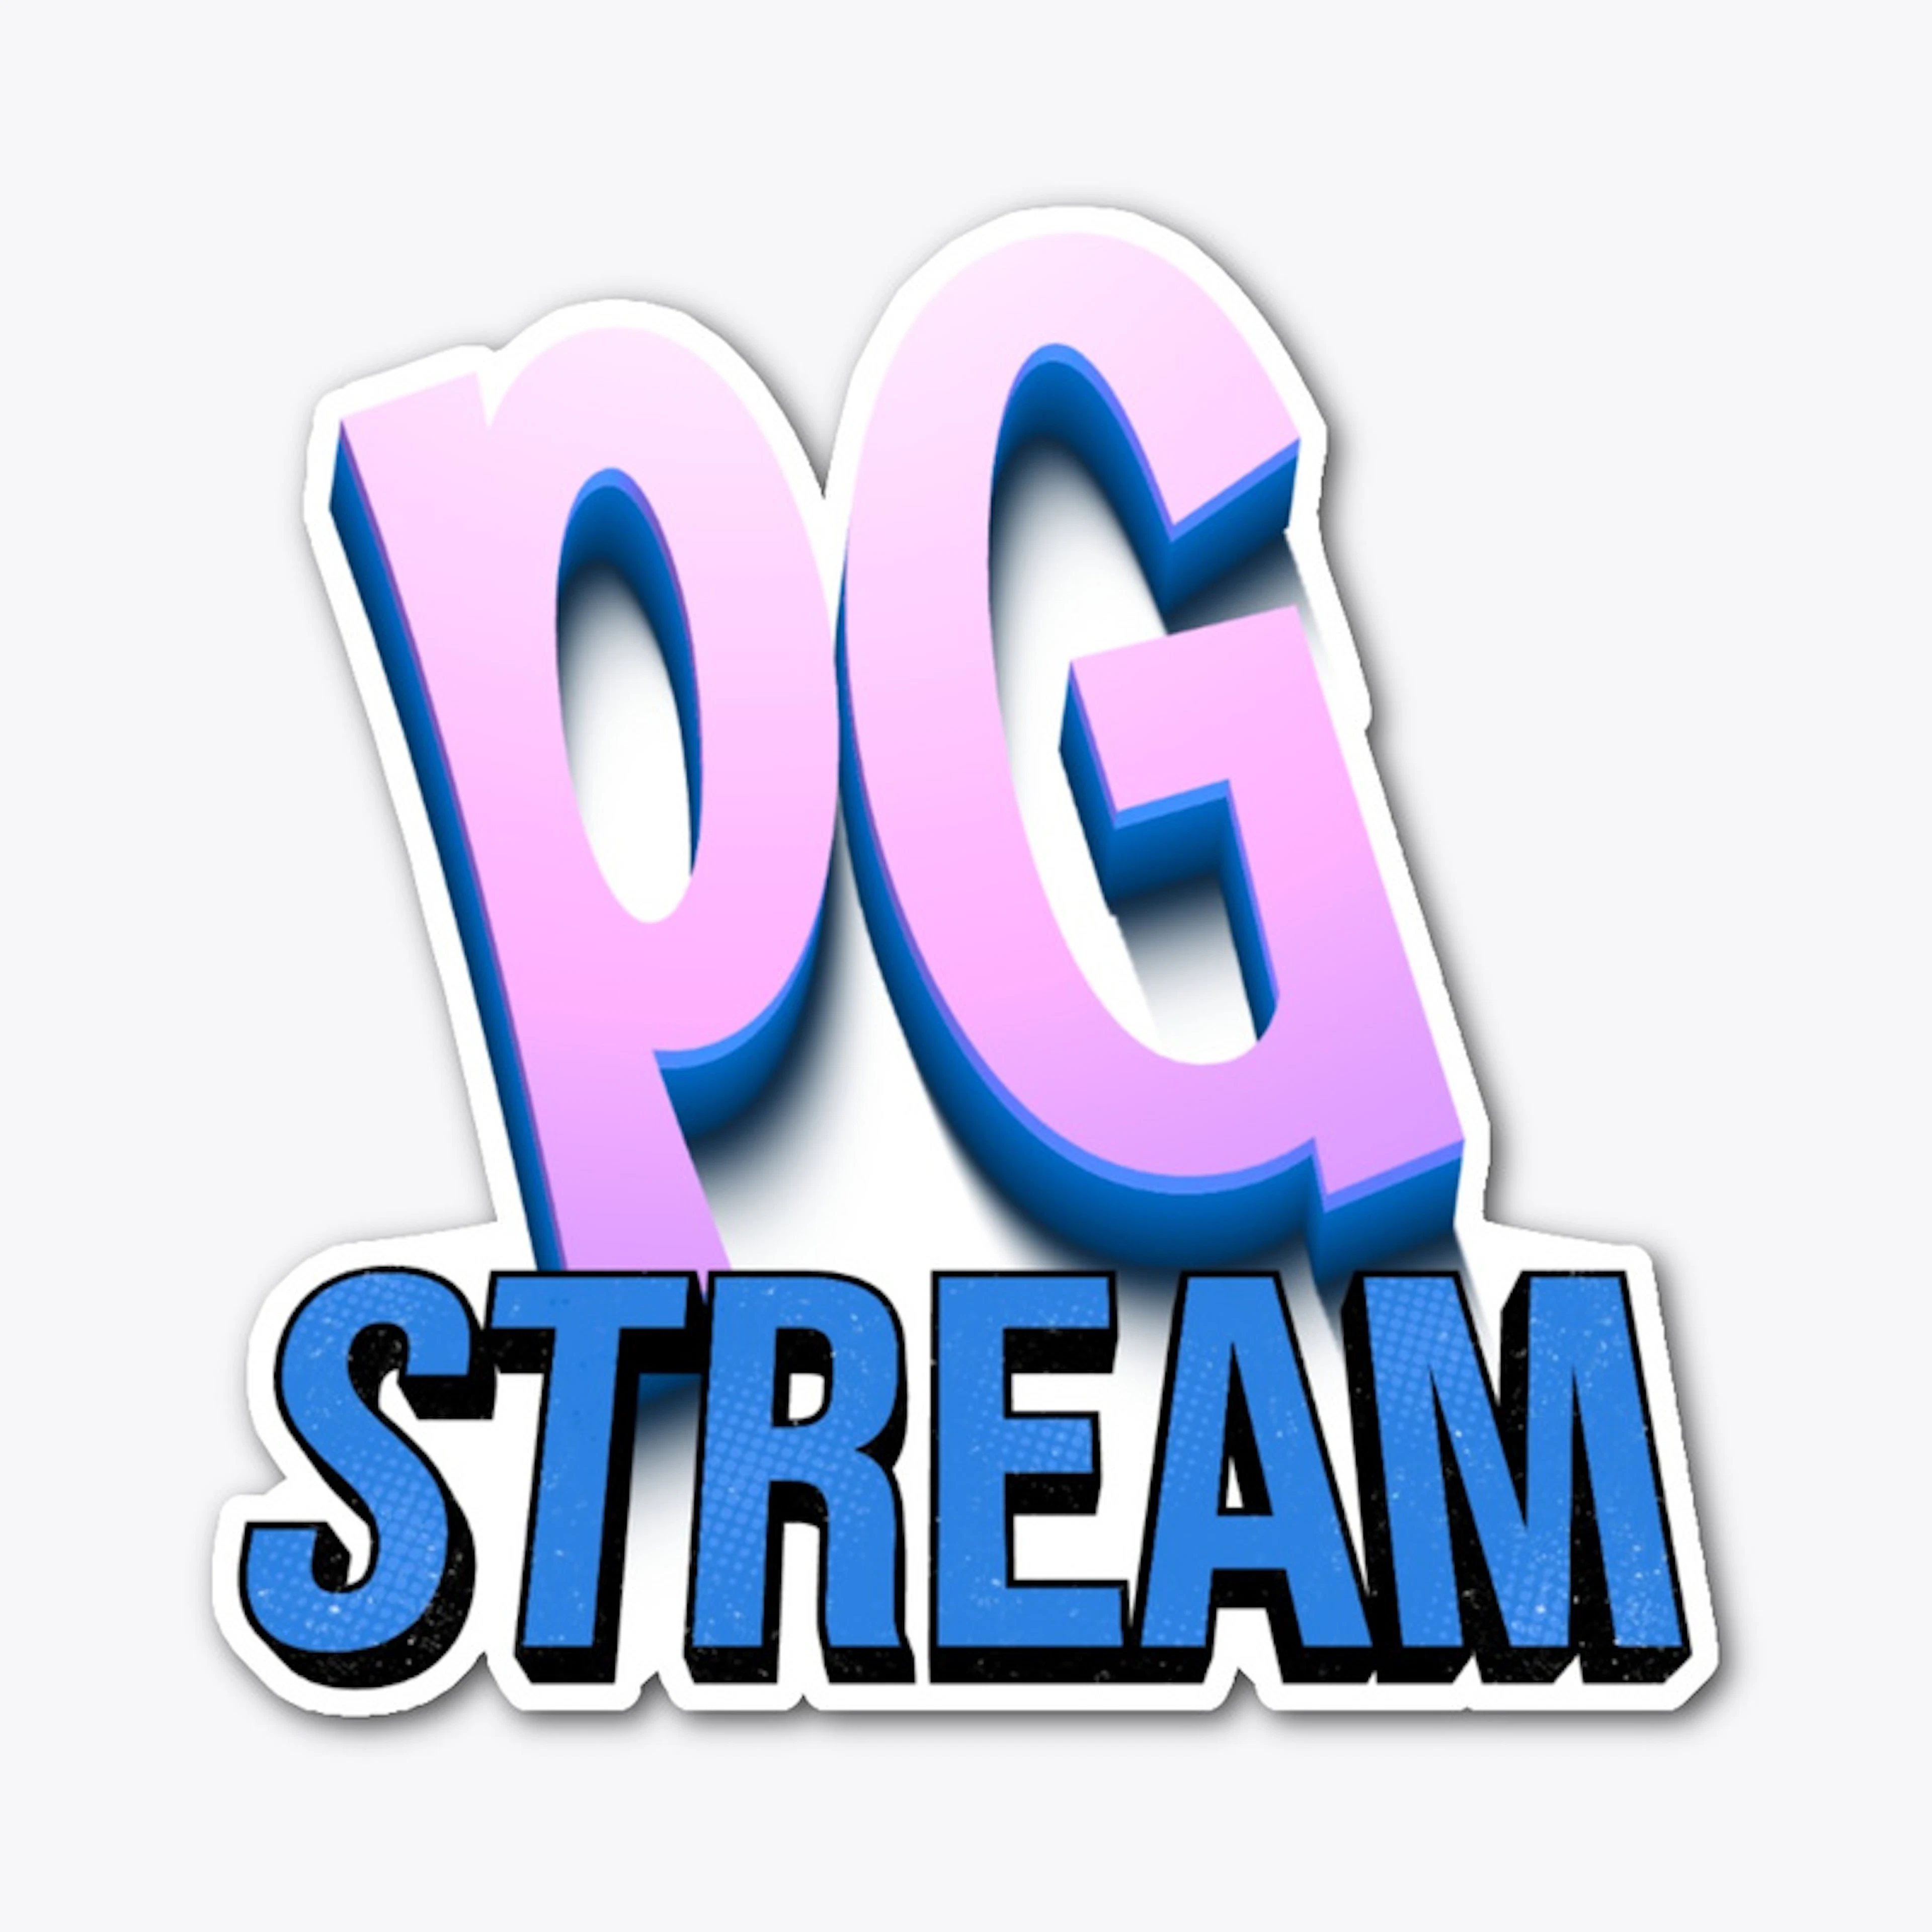 PG Stream